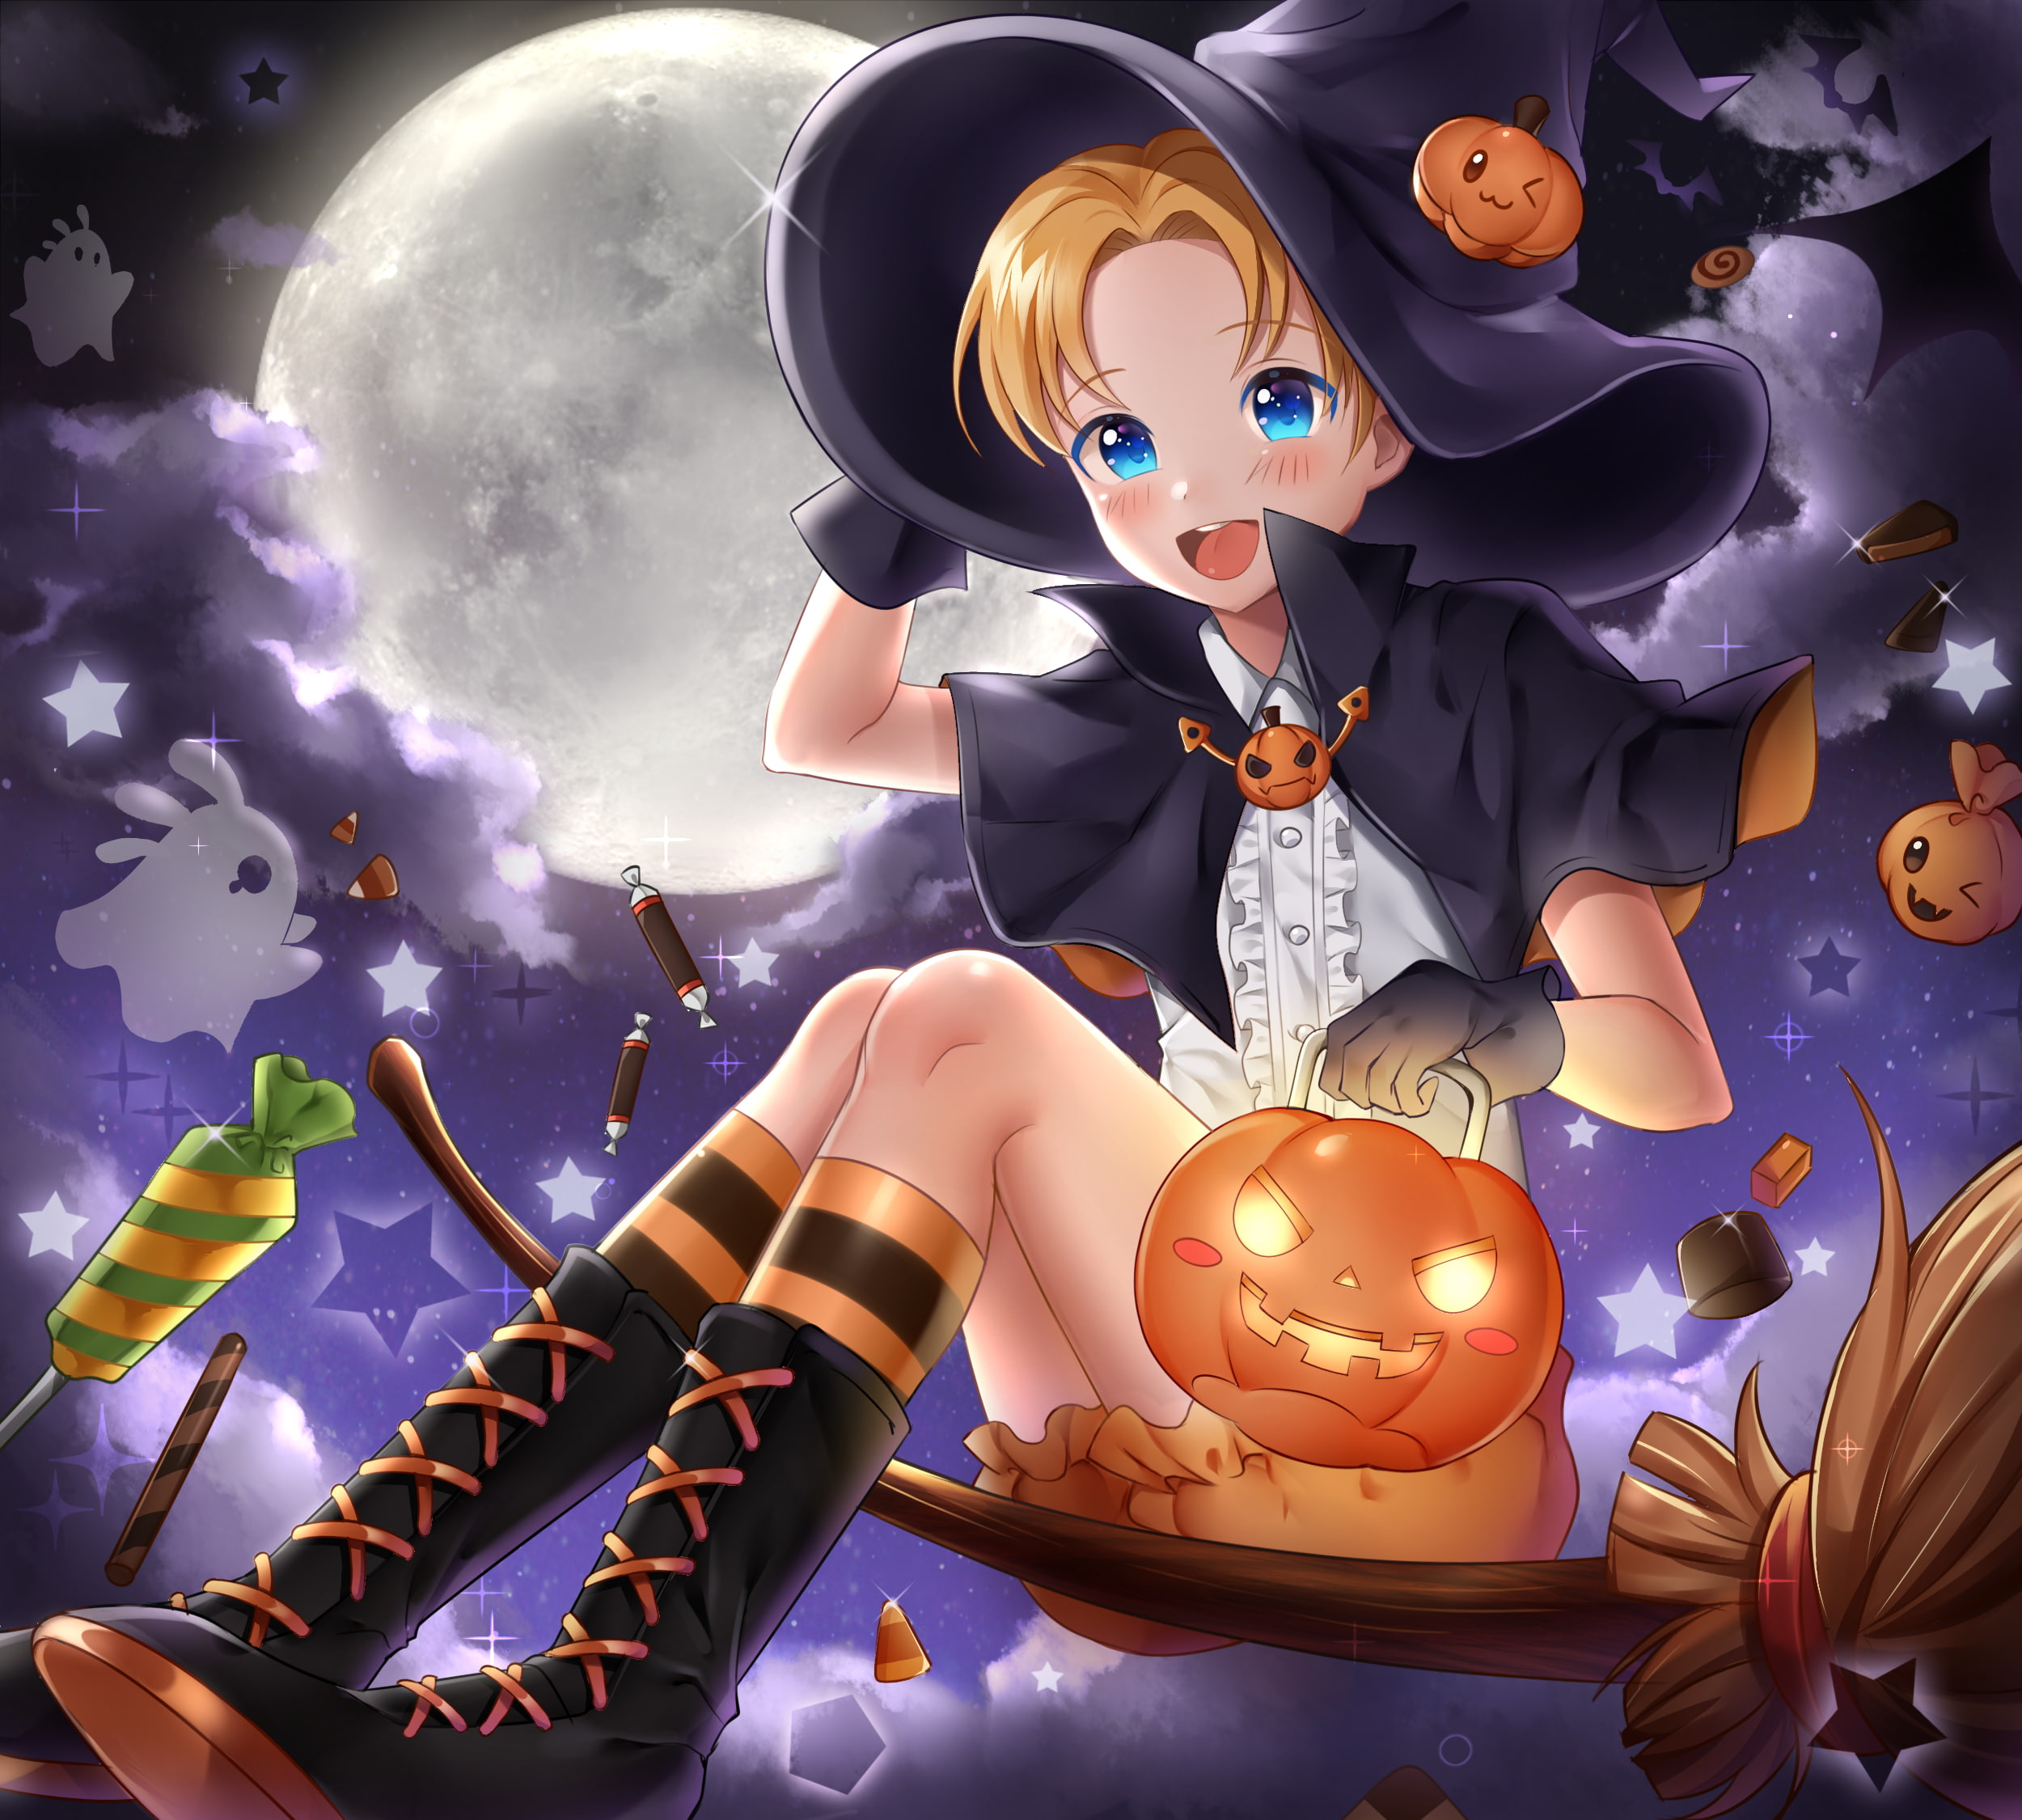 anduin wrynn, halloween, anime style, moon, witch, celebration